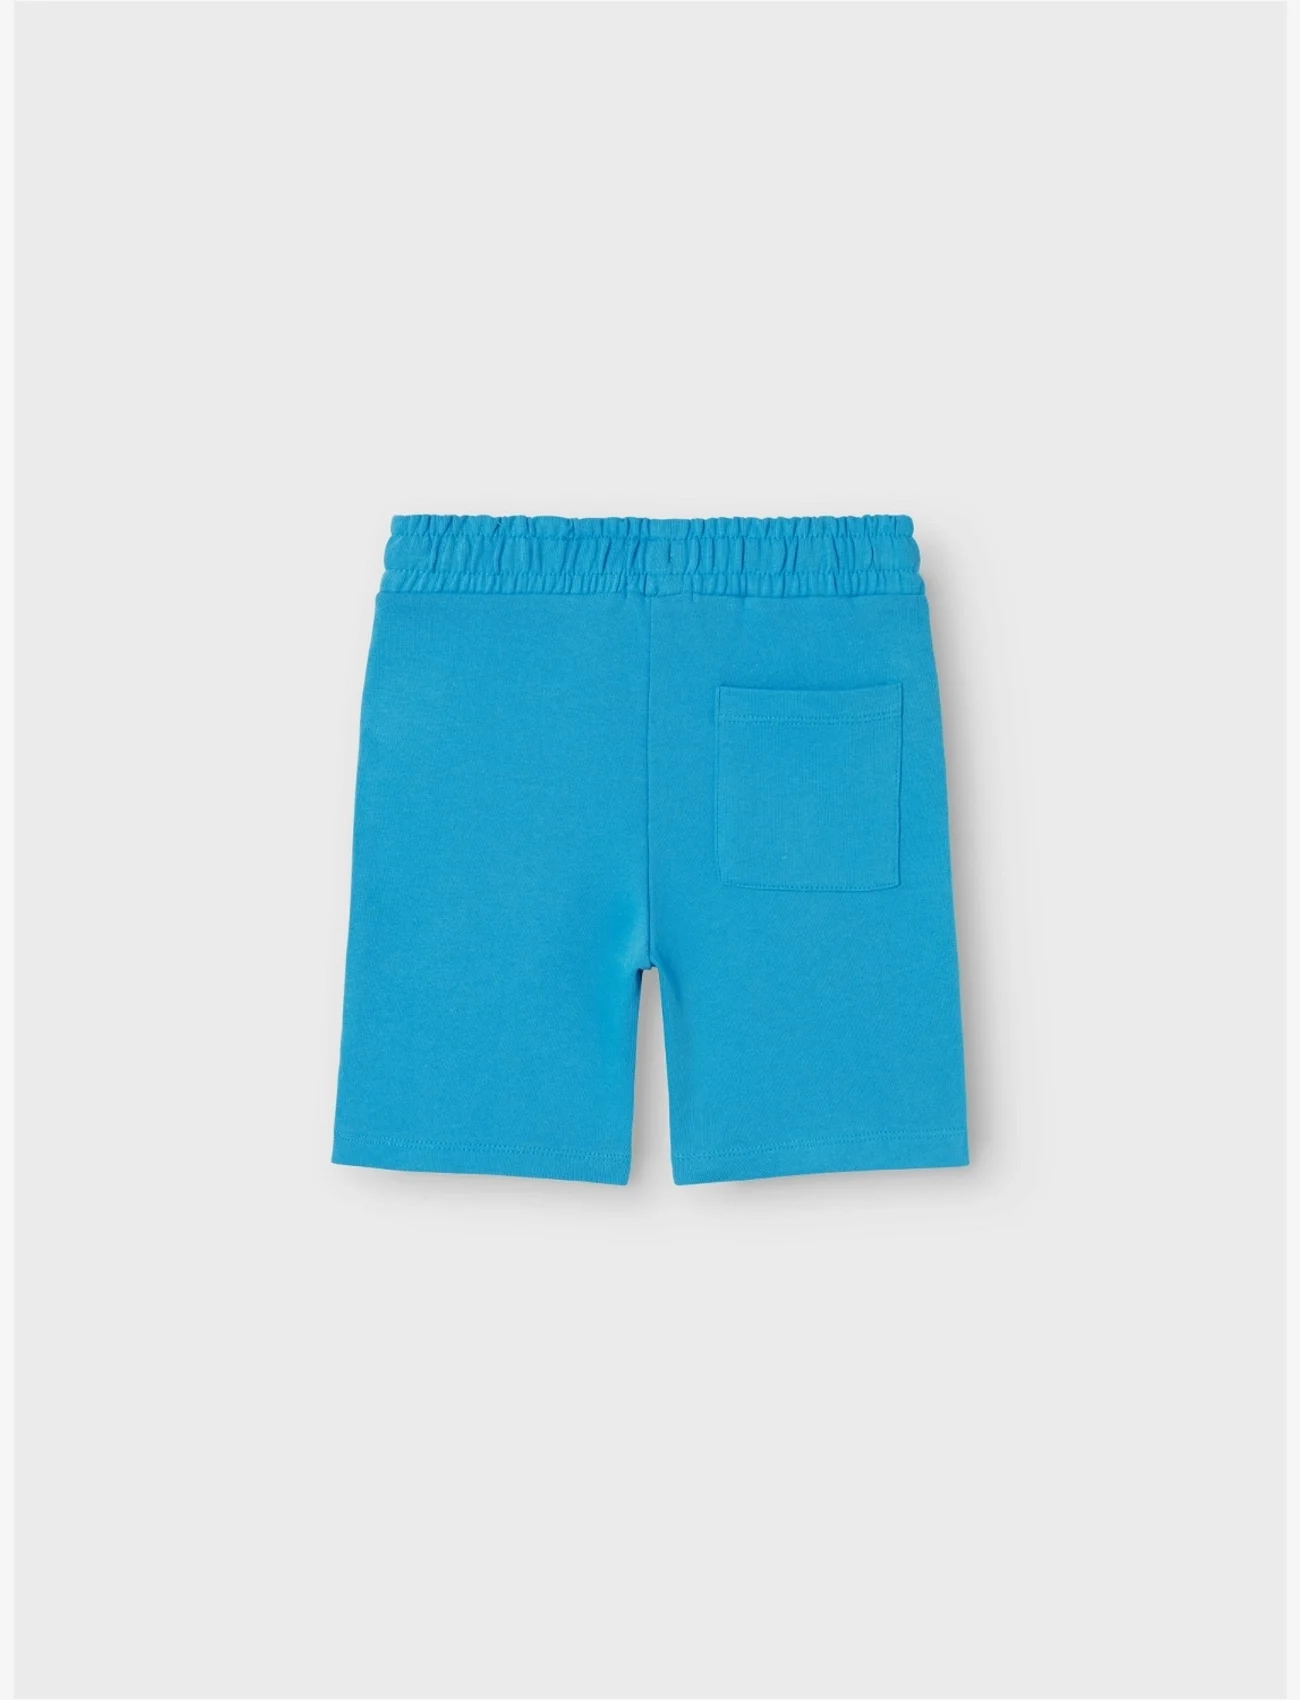 name it - NKMDALOVAN SWE SHORTS PB - sweat shorts - swedish blue - 1